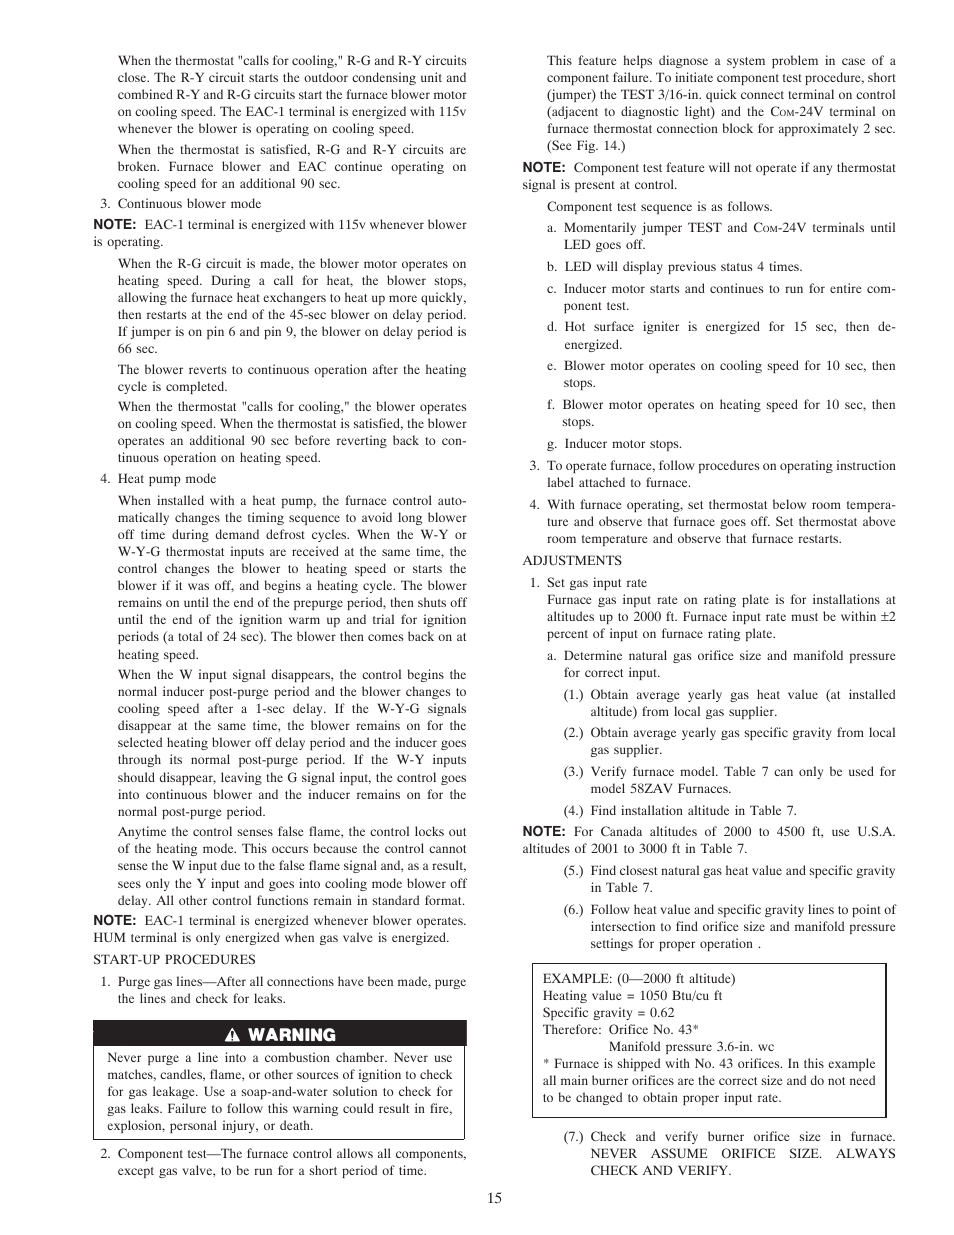 Carrier WEATHERMAKER 8000 58ZAV User Manual | Page 15 / 24 | Original mode